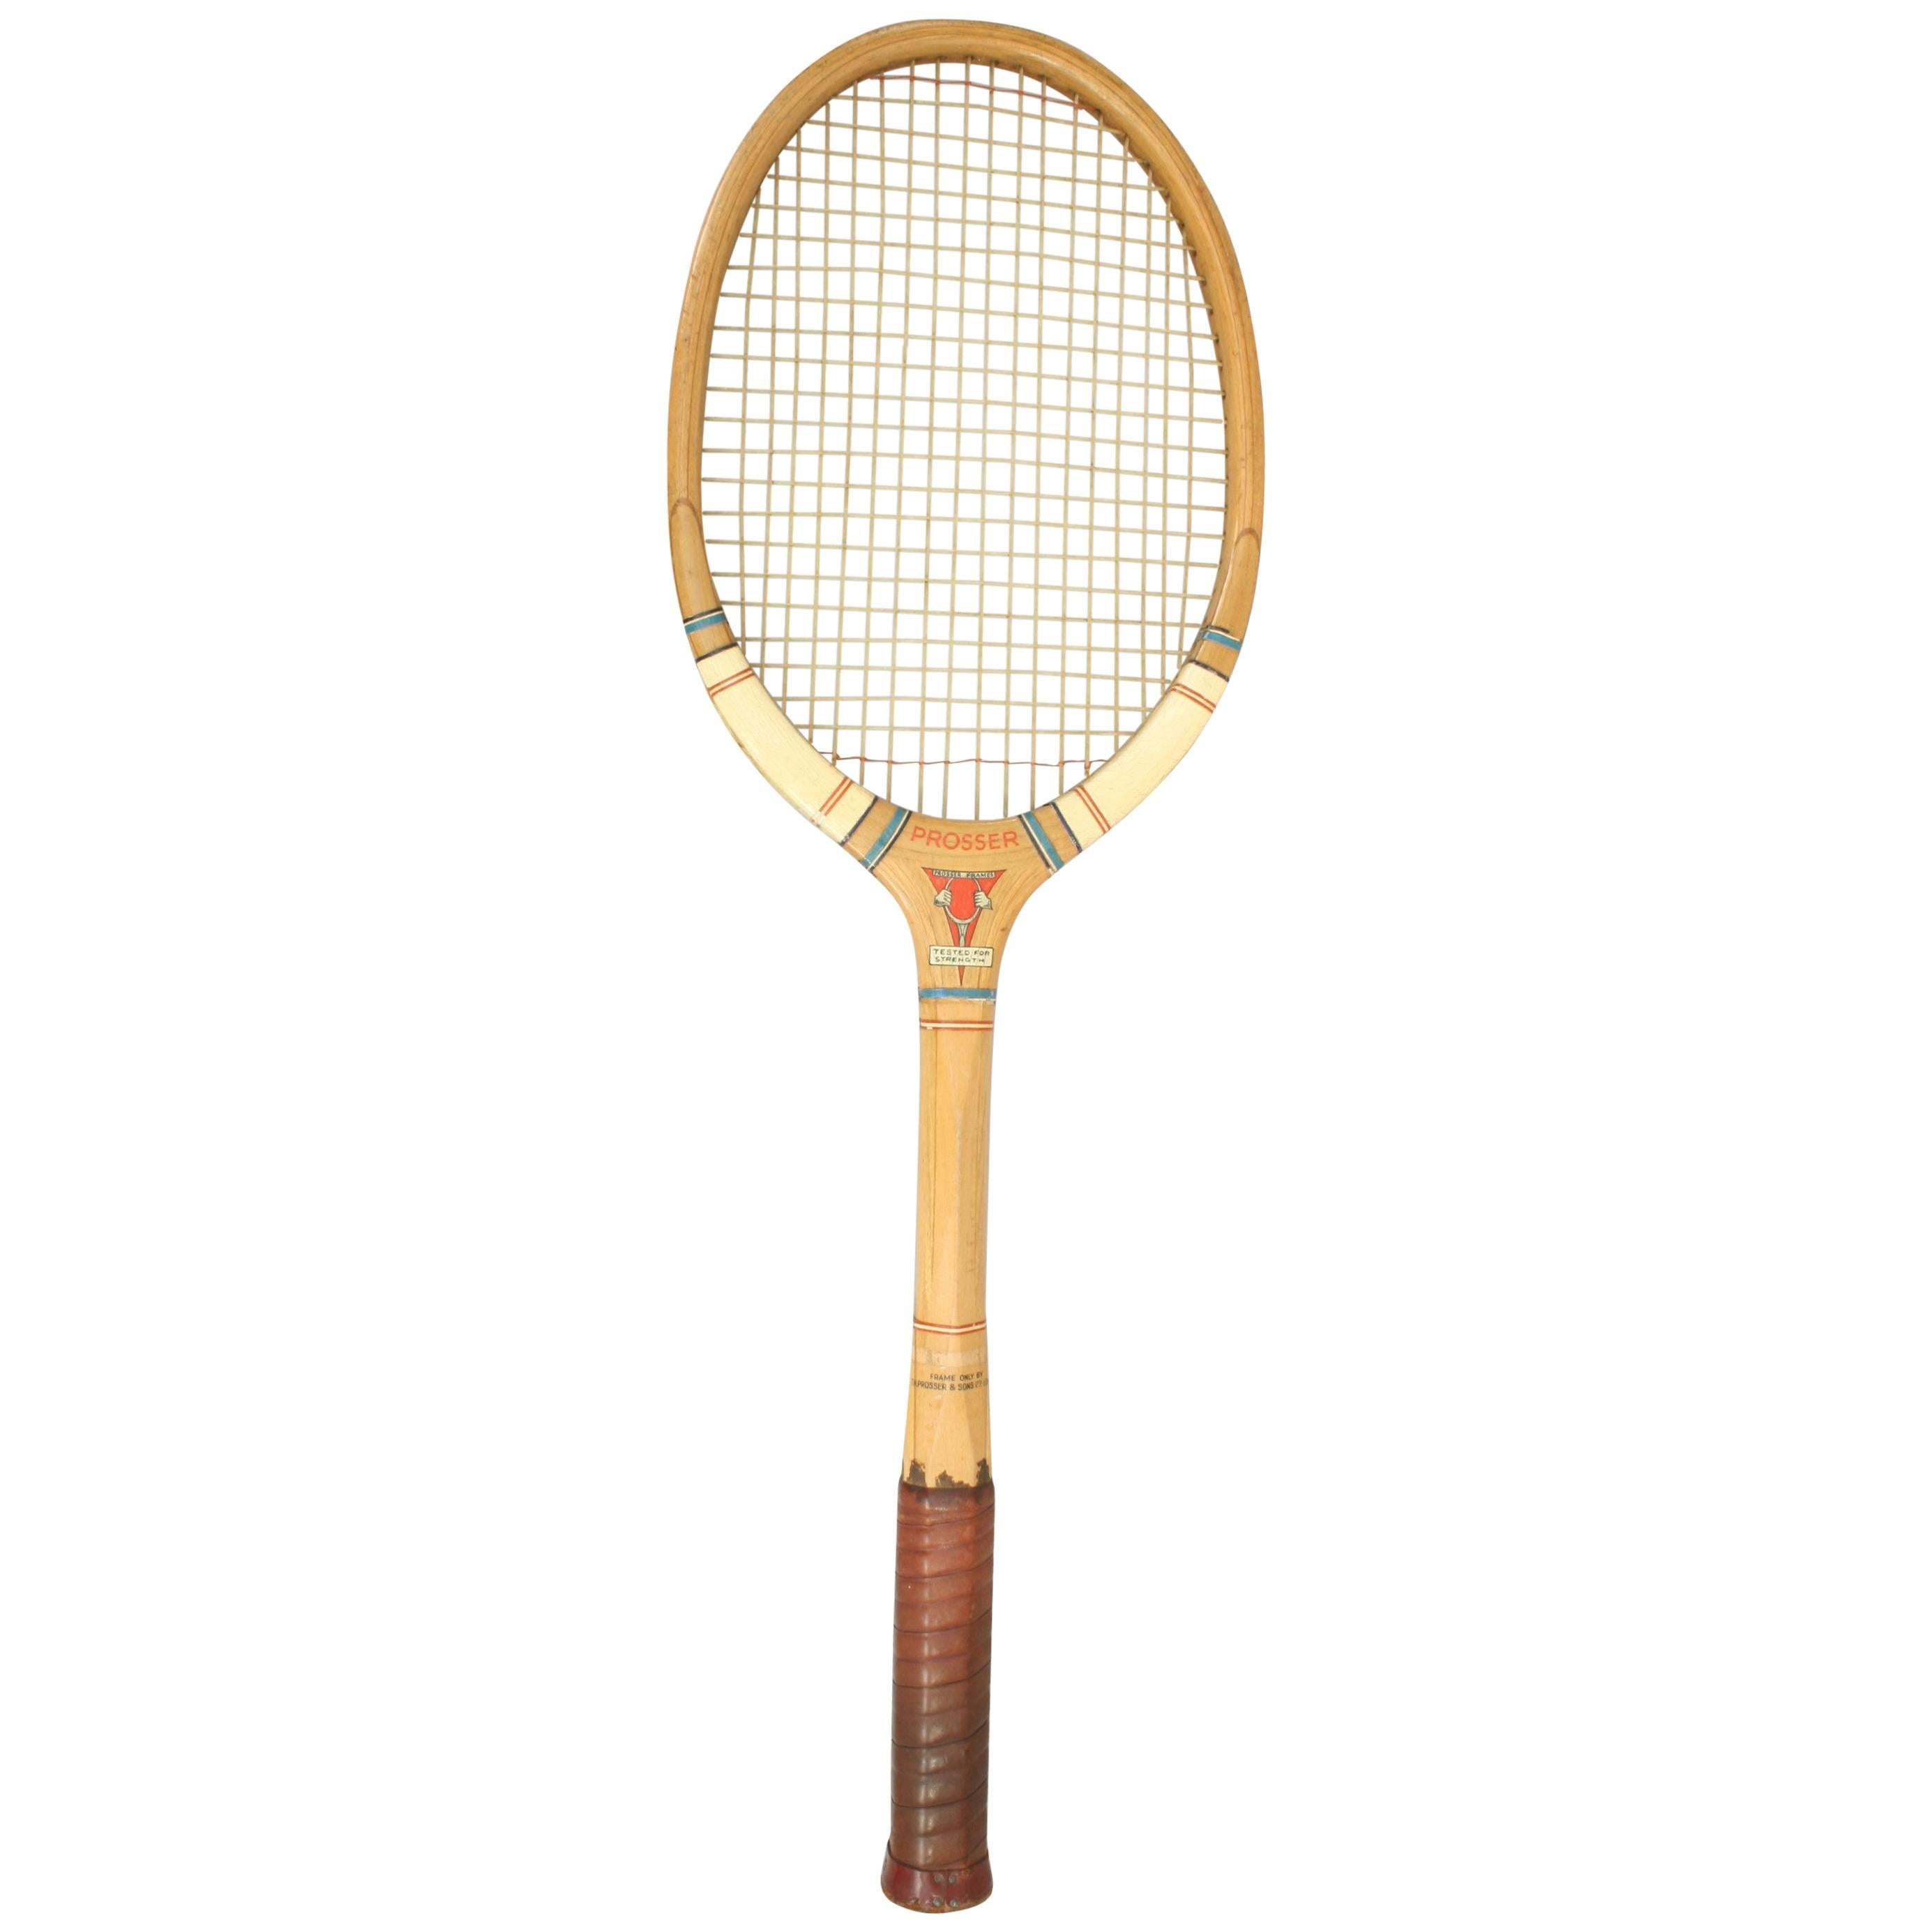 Vintage Prosser Tennis Racket